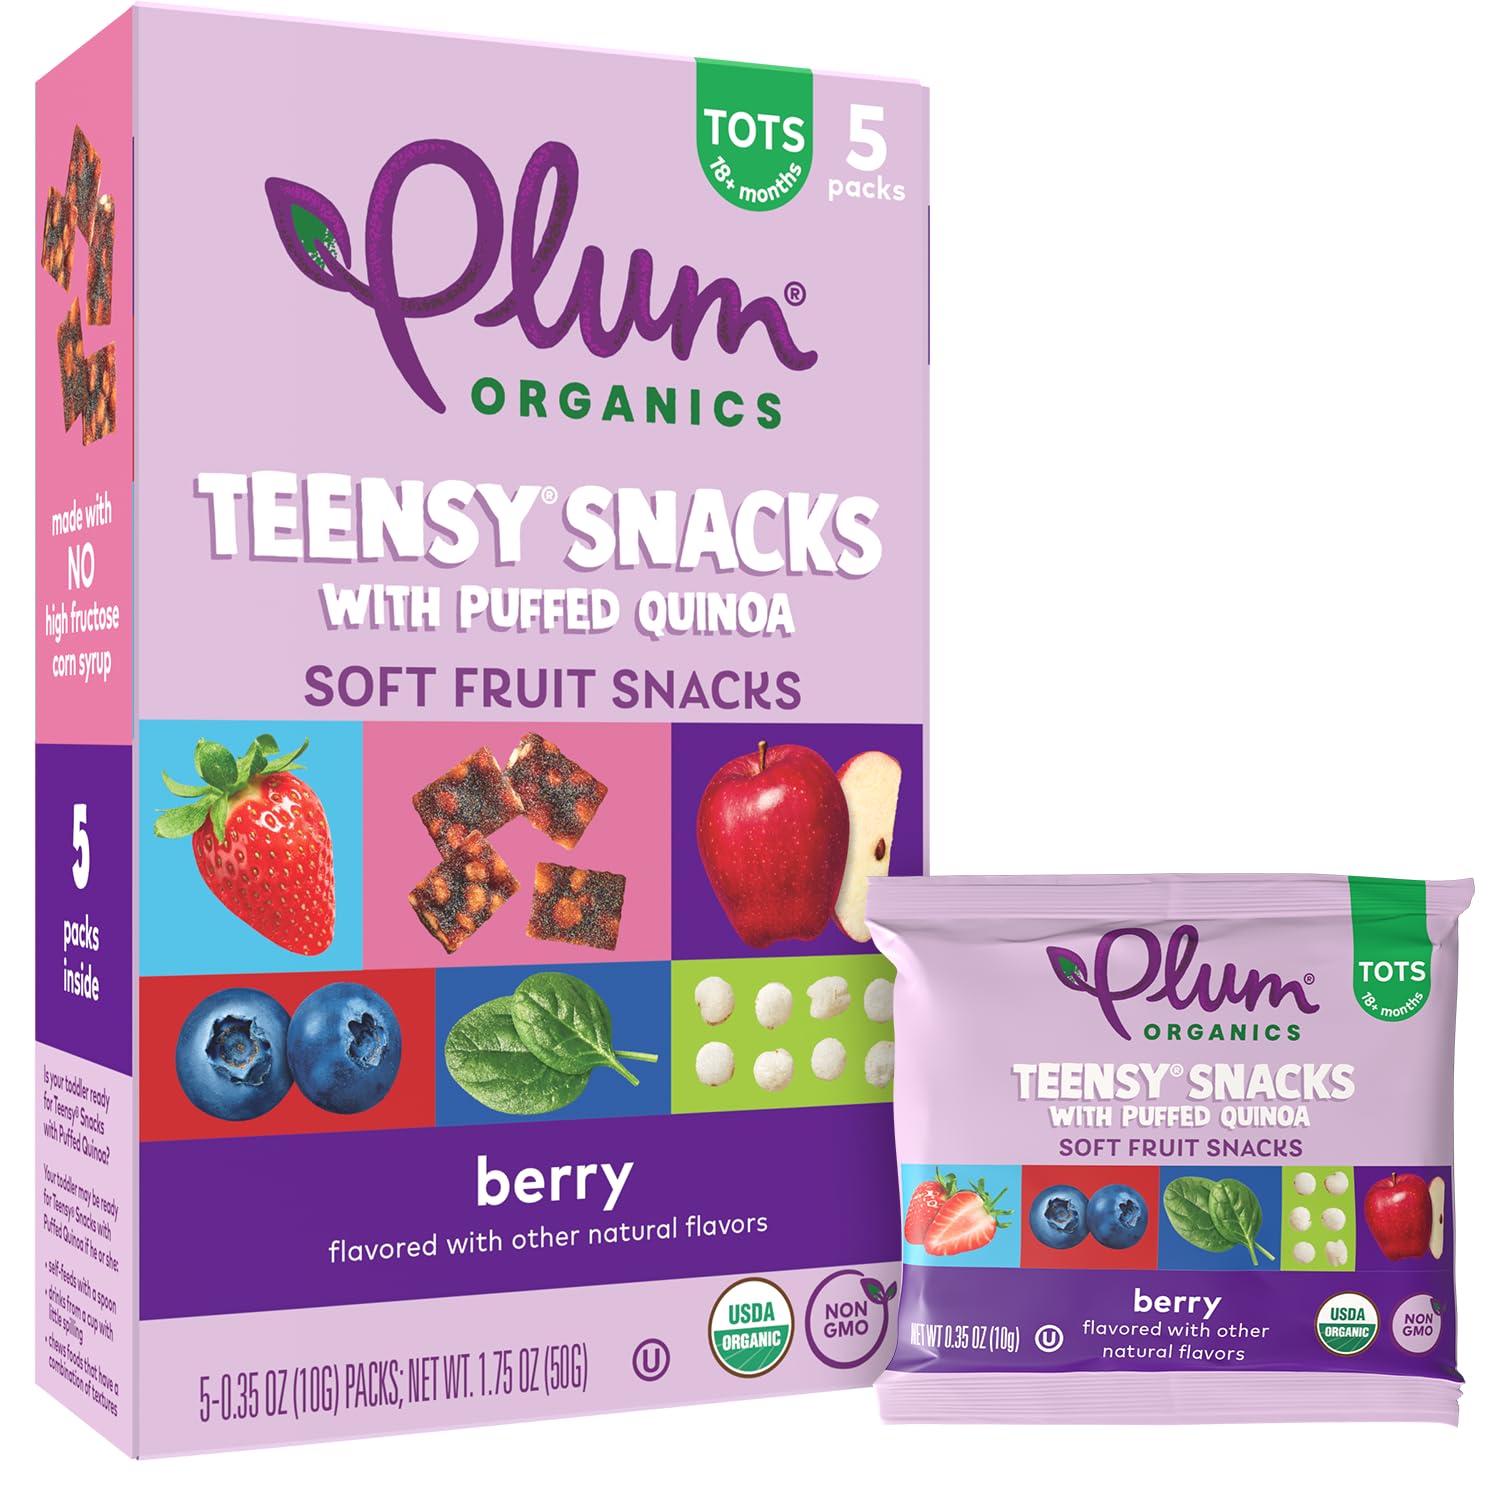 Plum Organics Teensy Snacks Soft Fruit Snacks - Berry with Puffed Quinoa - 0.35 oz Bags (Pack of 5) - Organic Toddler Food Fruit Snacks